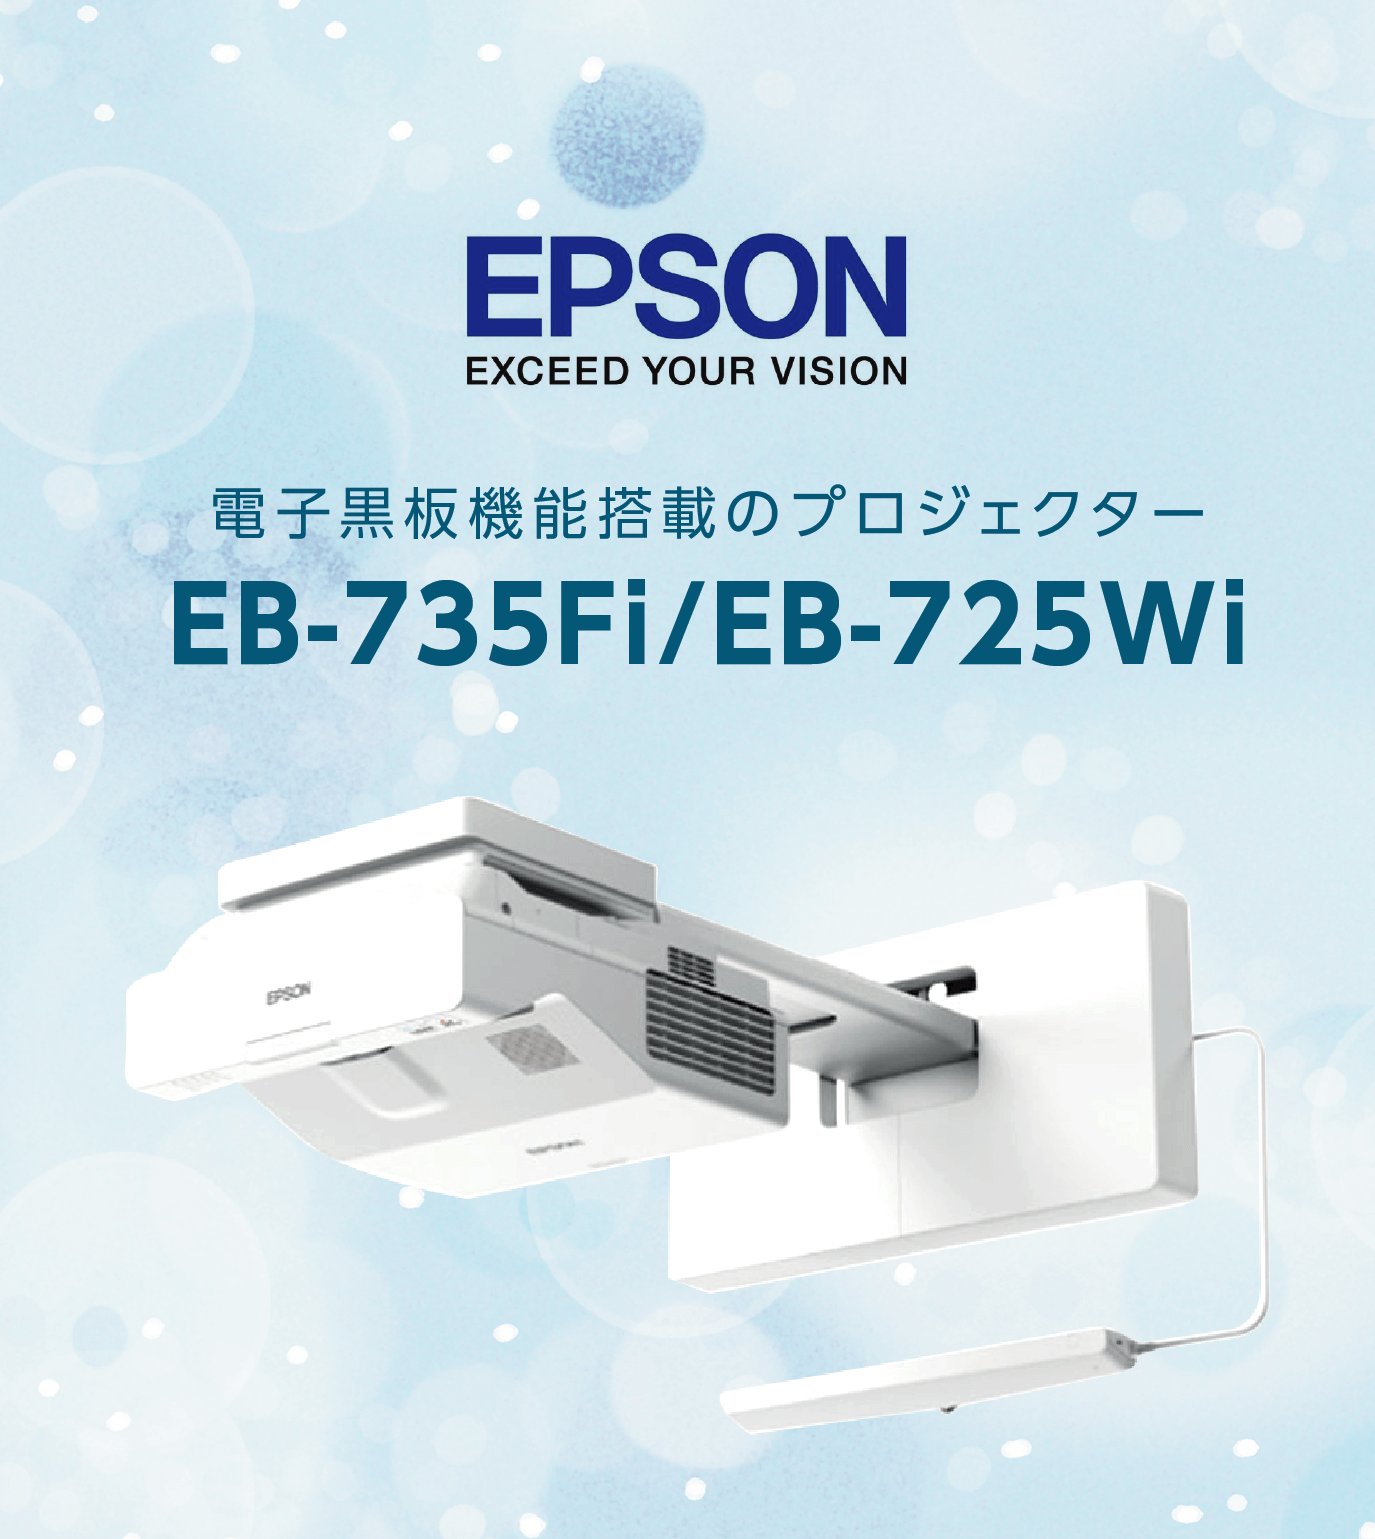 EPSON EB-735Fi/EB-725Wi | Sales Portal Site - BP Platinum